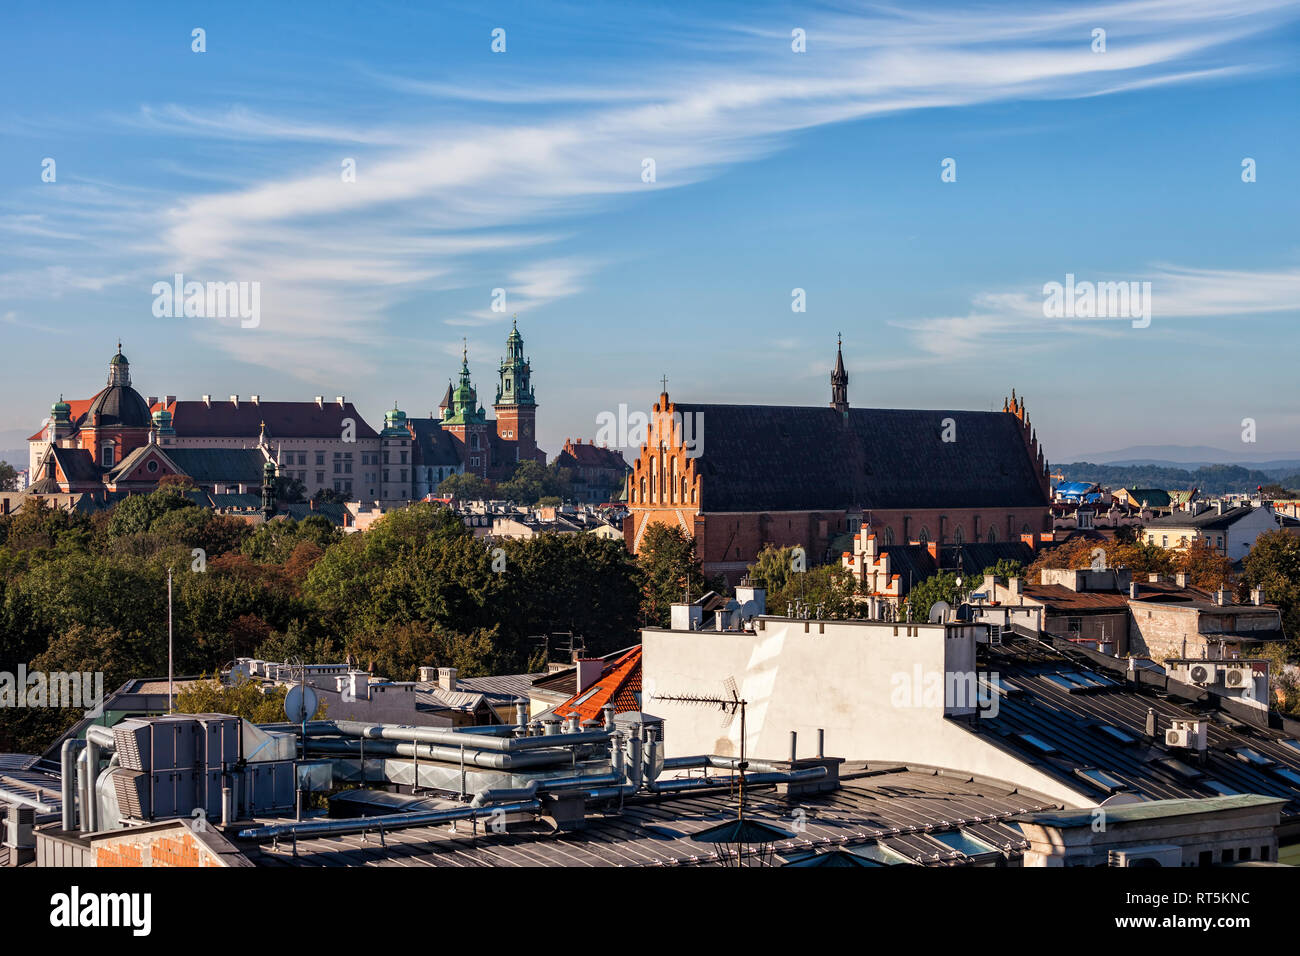 Poland, Krakow, historic city center cityscape with Wawel Castle and Holy Trinity Church Stock Photo